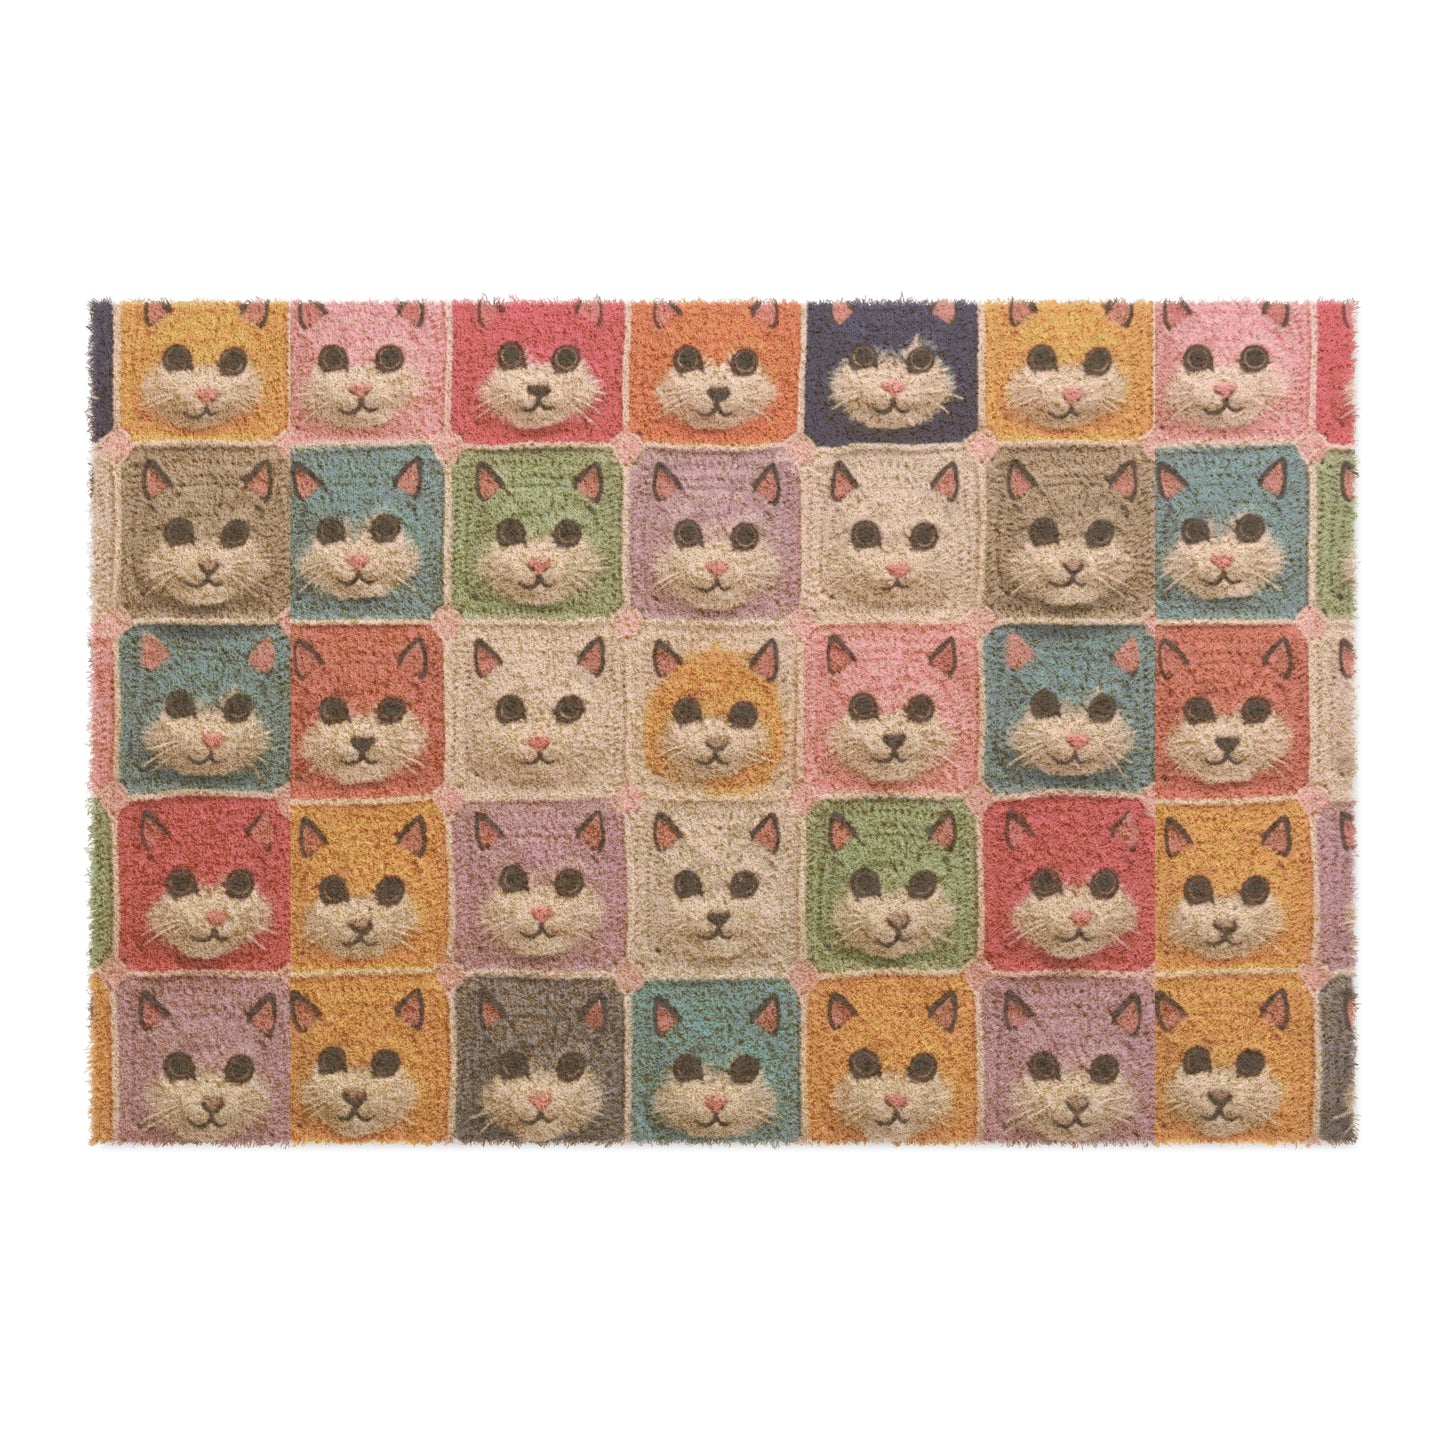 Crochet Cat, Summer Cotton, Feline, Retro Cat Cardigan, Kitten Crochet Cotton Creation - Door Coir Mat